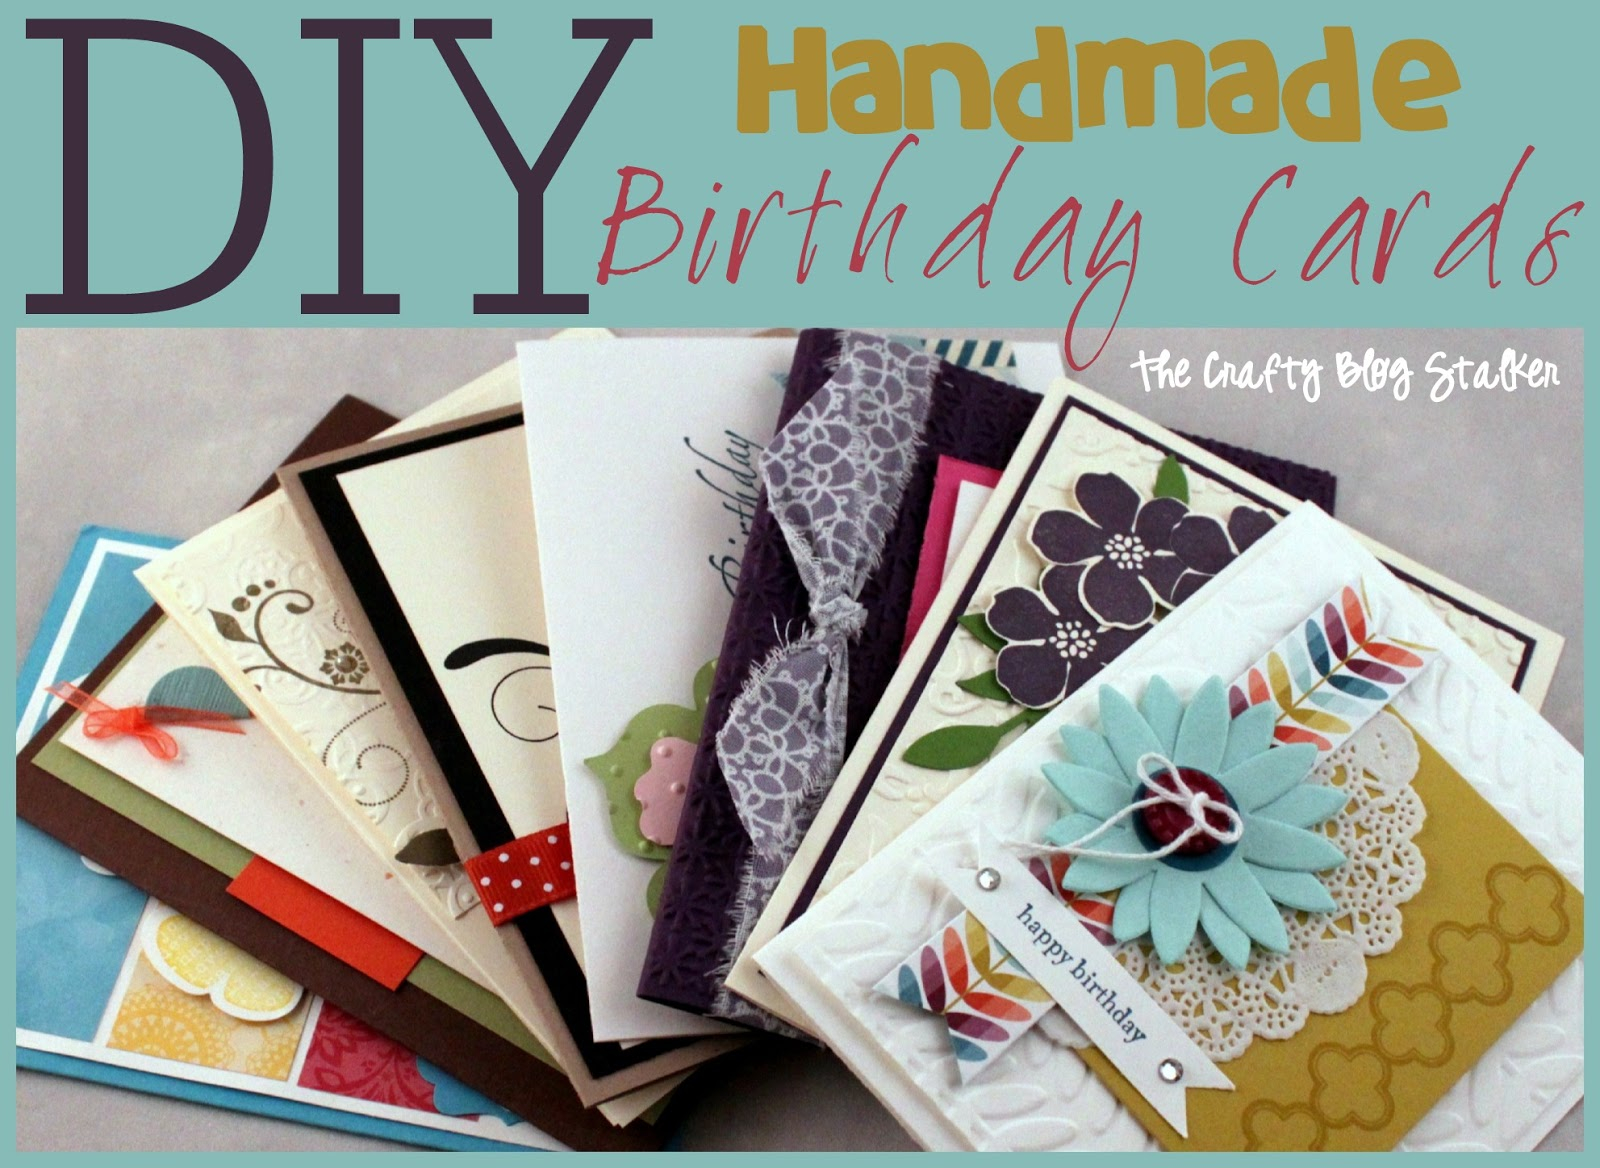 Card Making Ideas For Birthdays Handmade Birthday Card Ideas The Crafty Blog Stalker